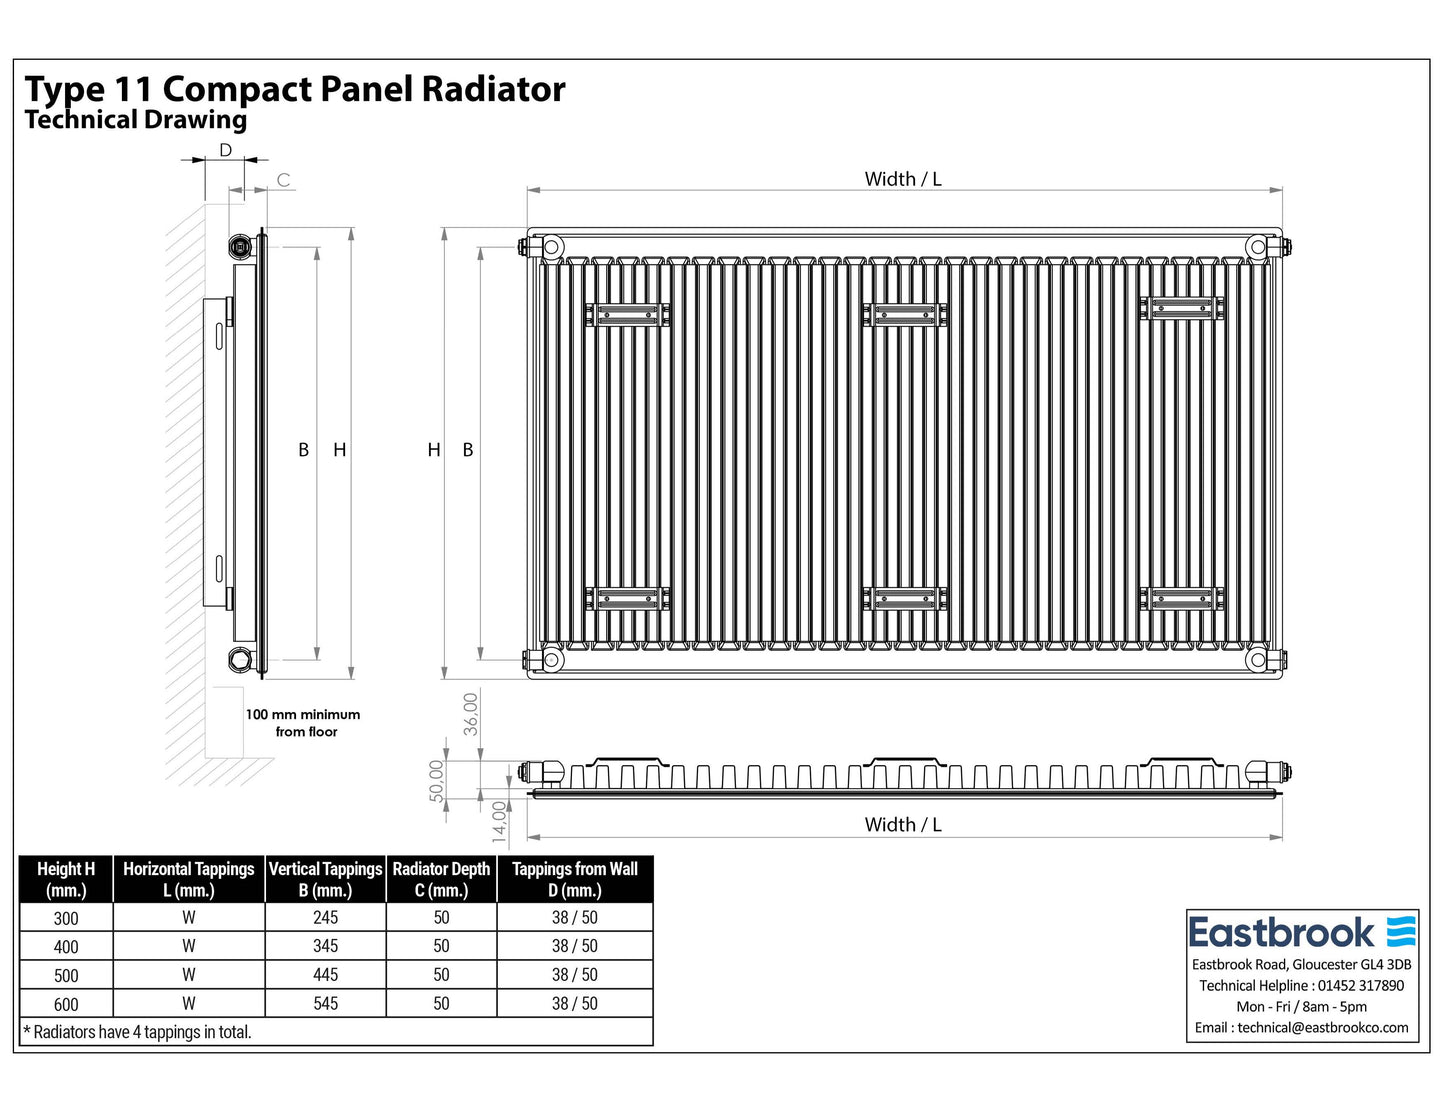 Eastbrook Type 11 Single Panel Matt Black Radiator 600mm High x 1600mm Wide Technical Image 25.0076